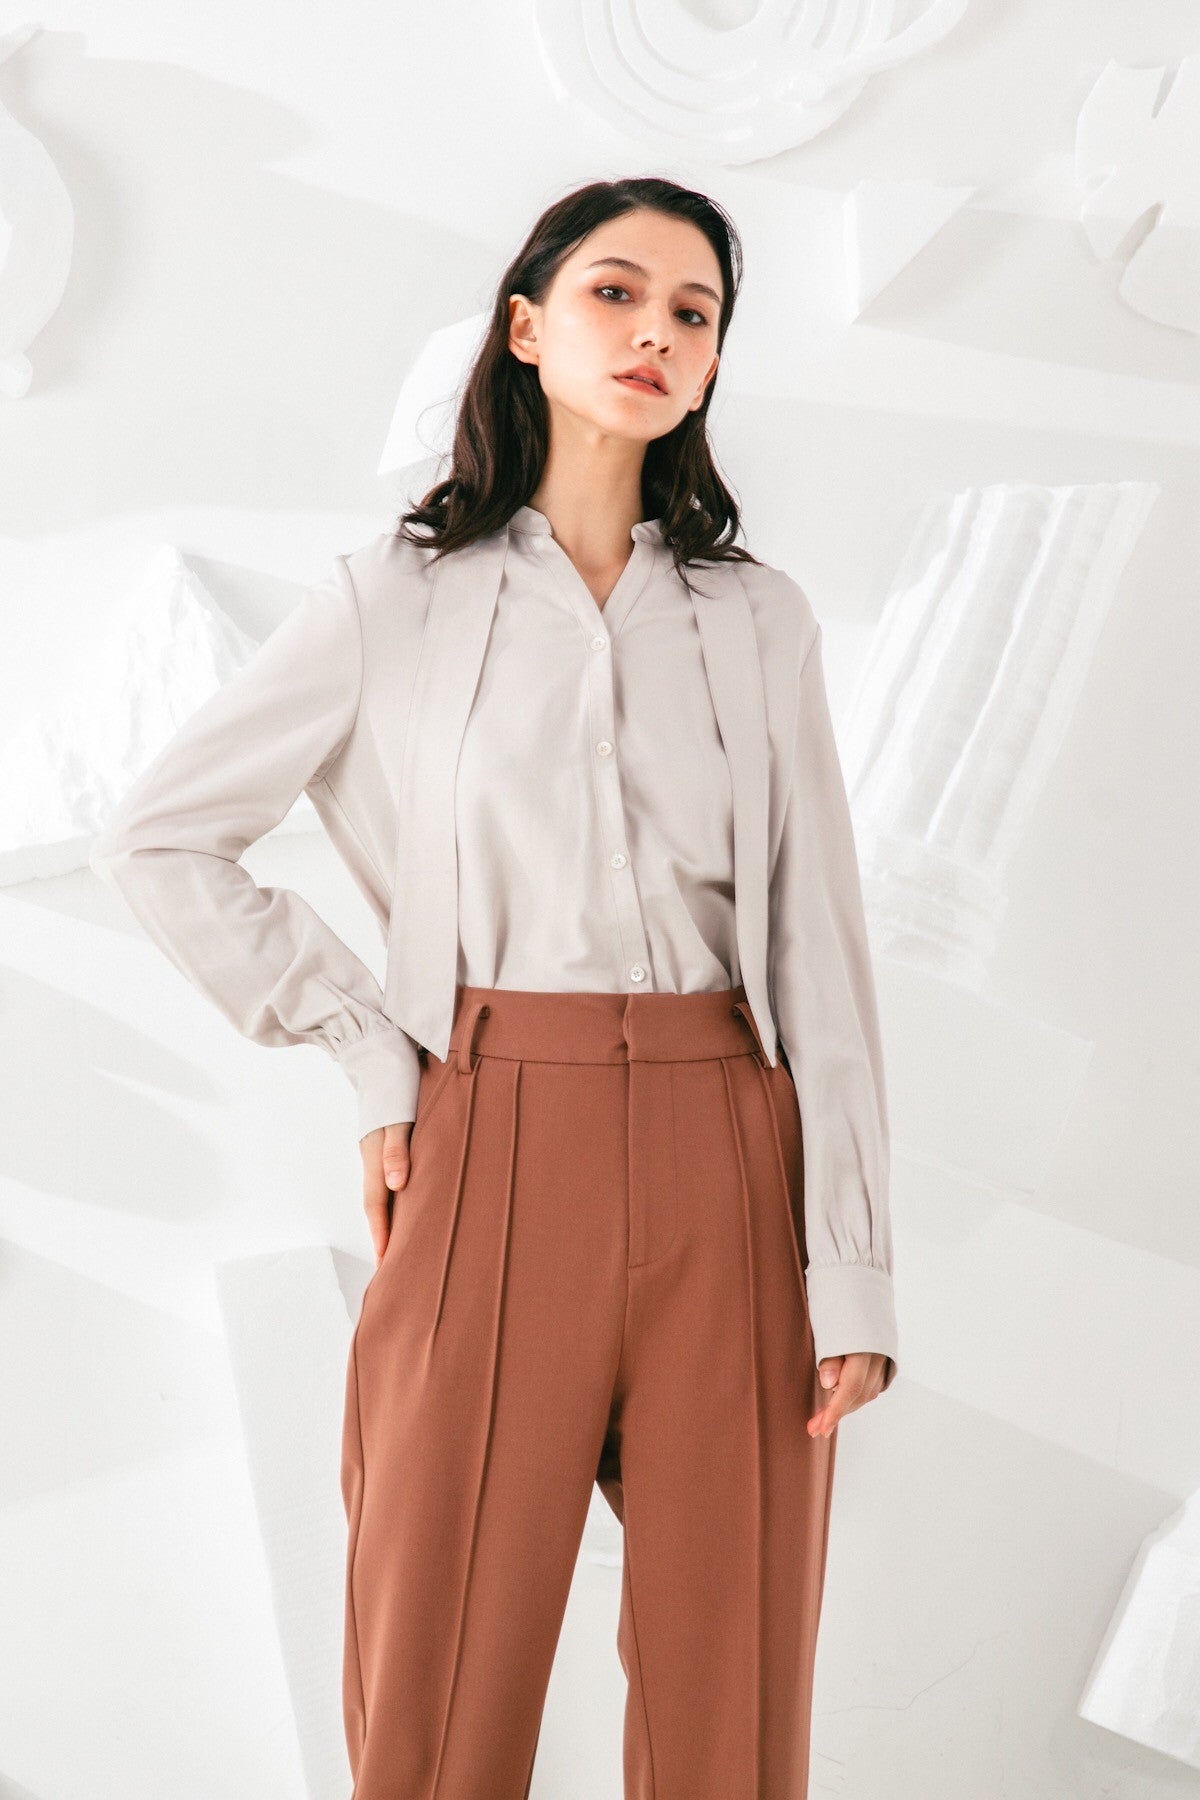 SKYE San Francisco SF shop ethical modern minimalist quality women clothing fashion Eléonore Blouse light grey 4